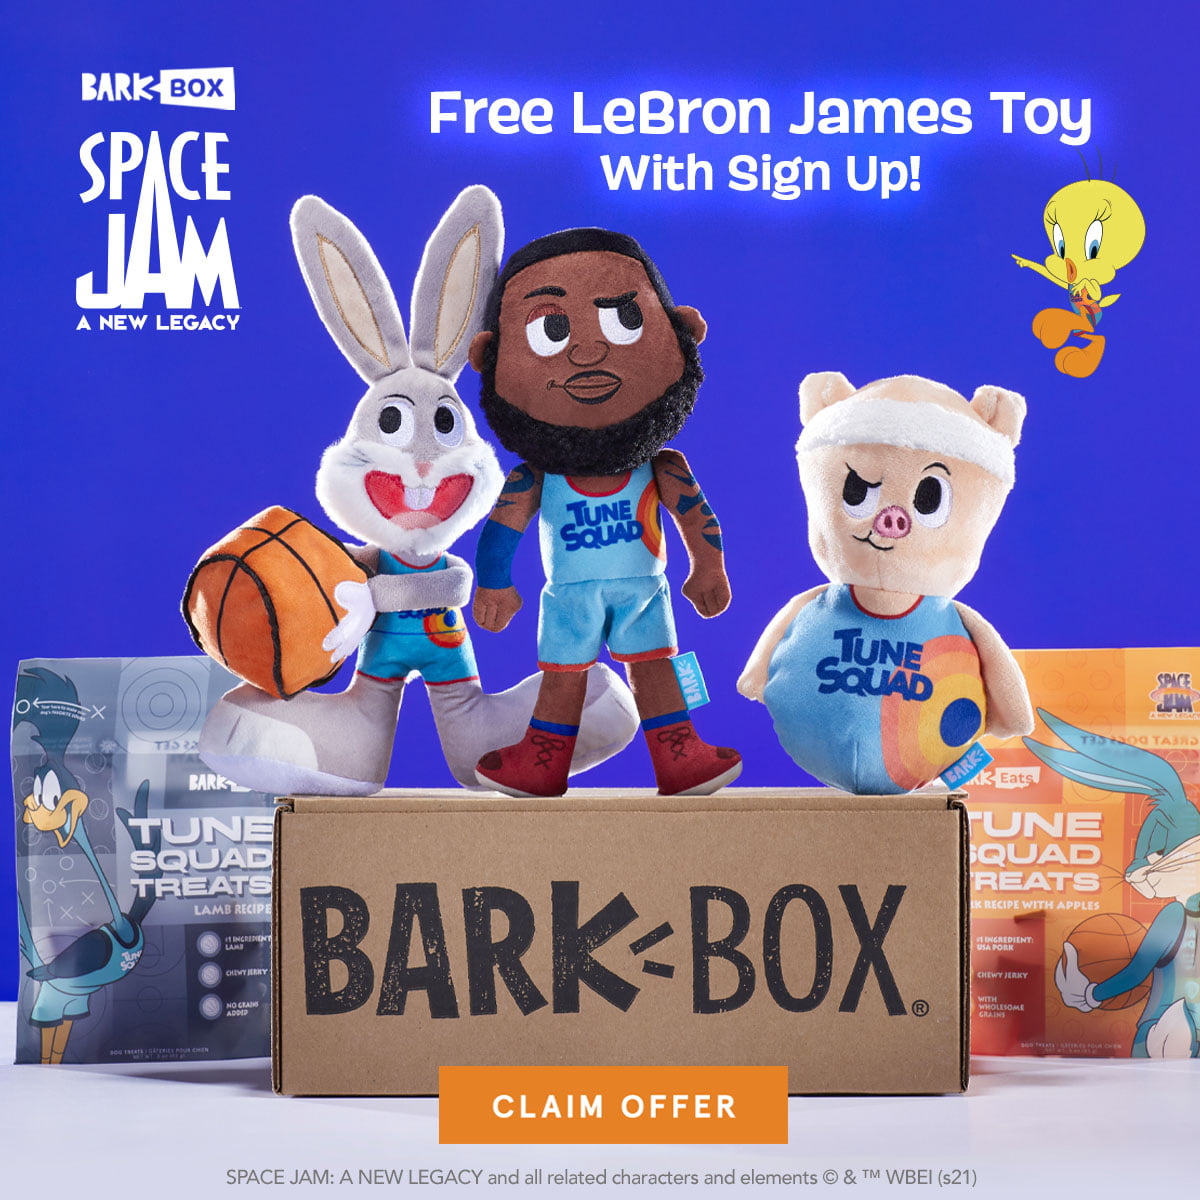 BarkBox Space Jam themed box: FREE LeBron James Toy